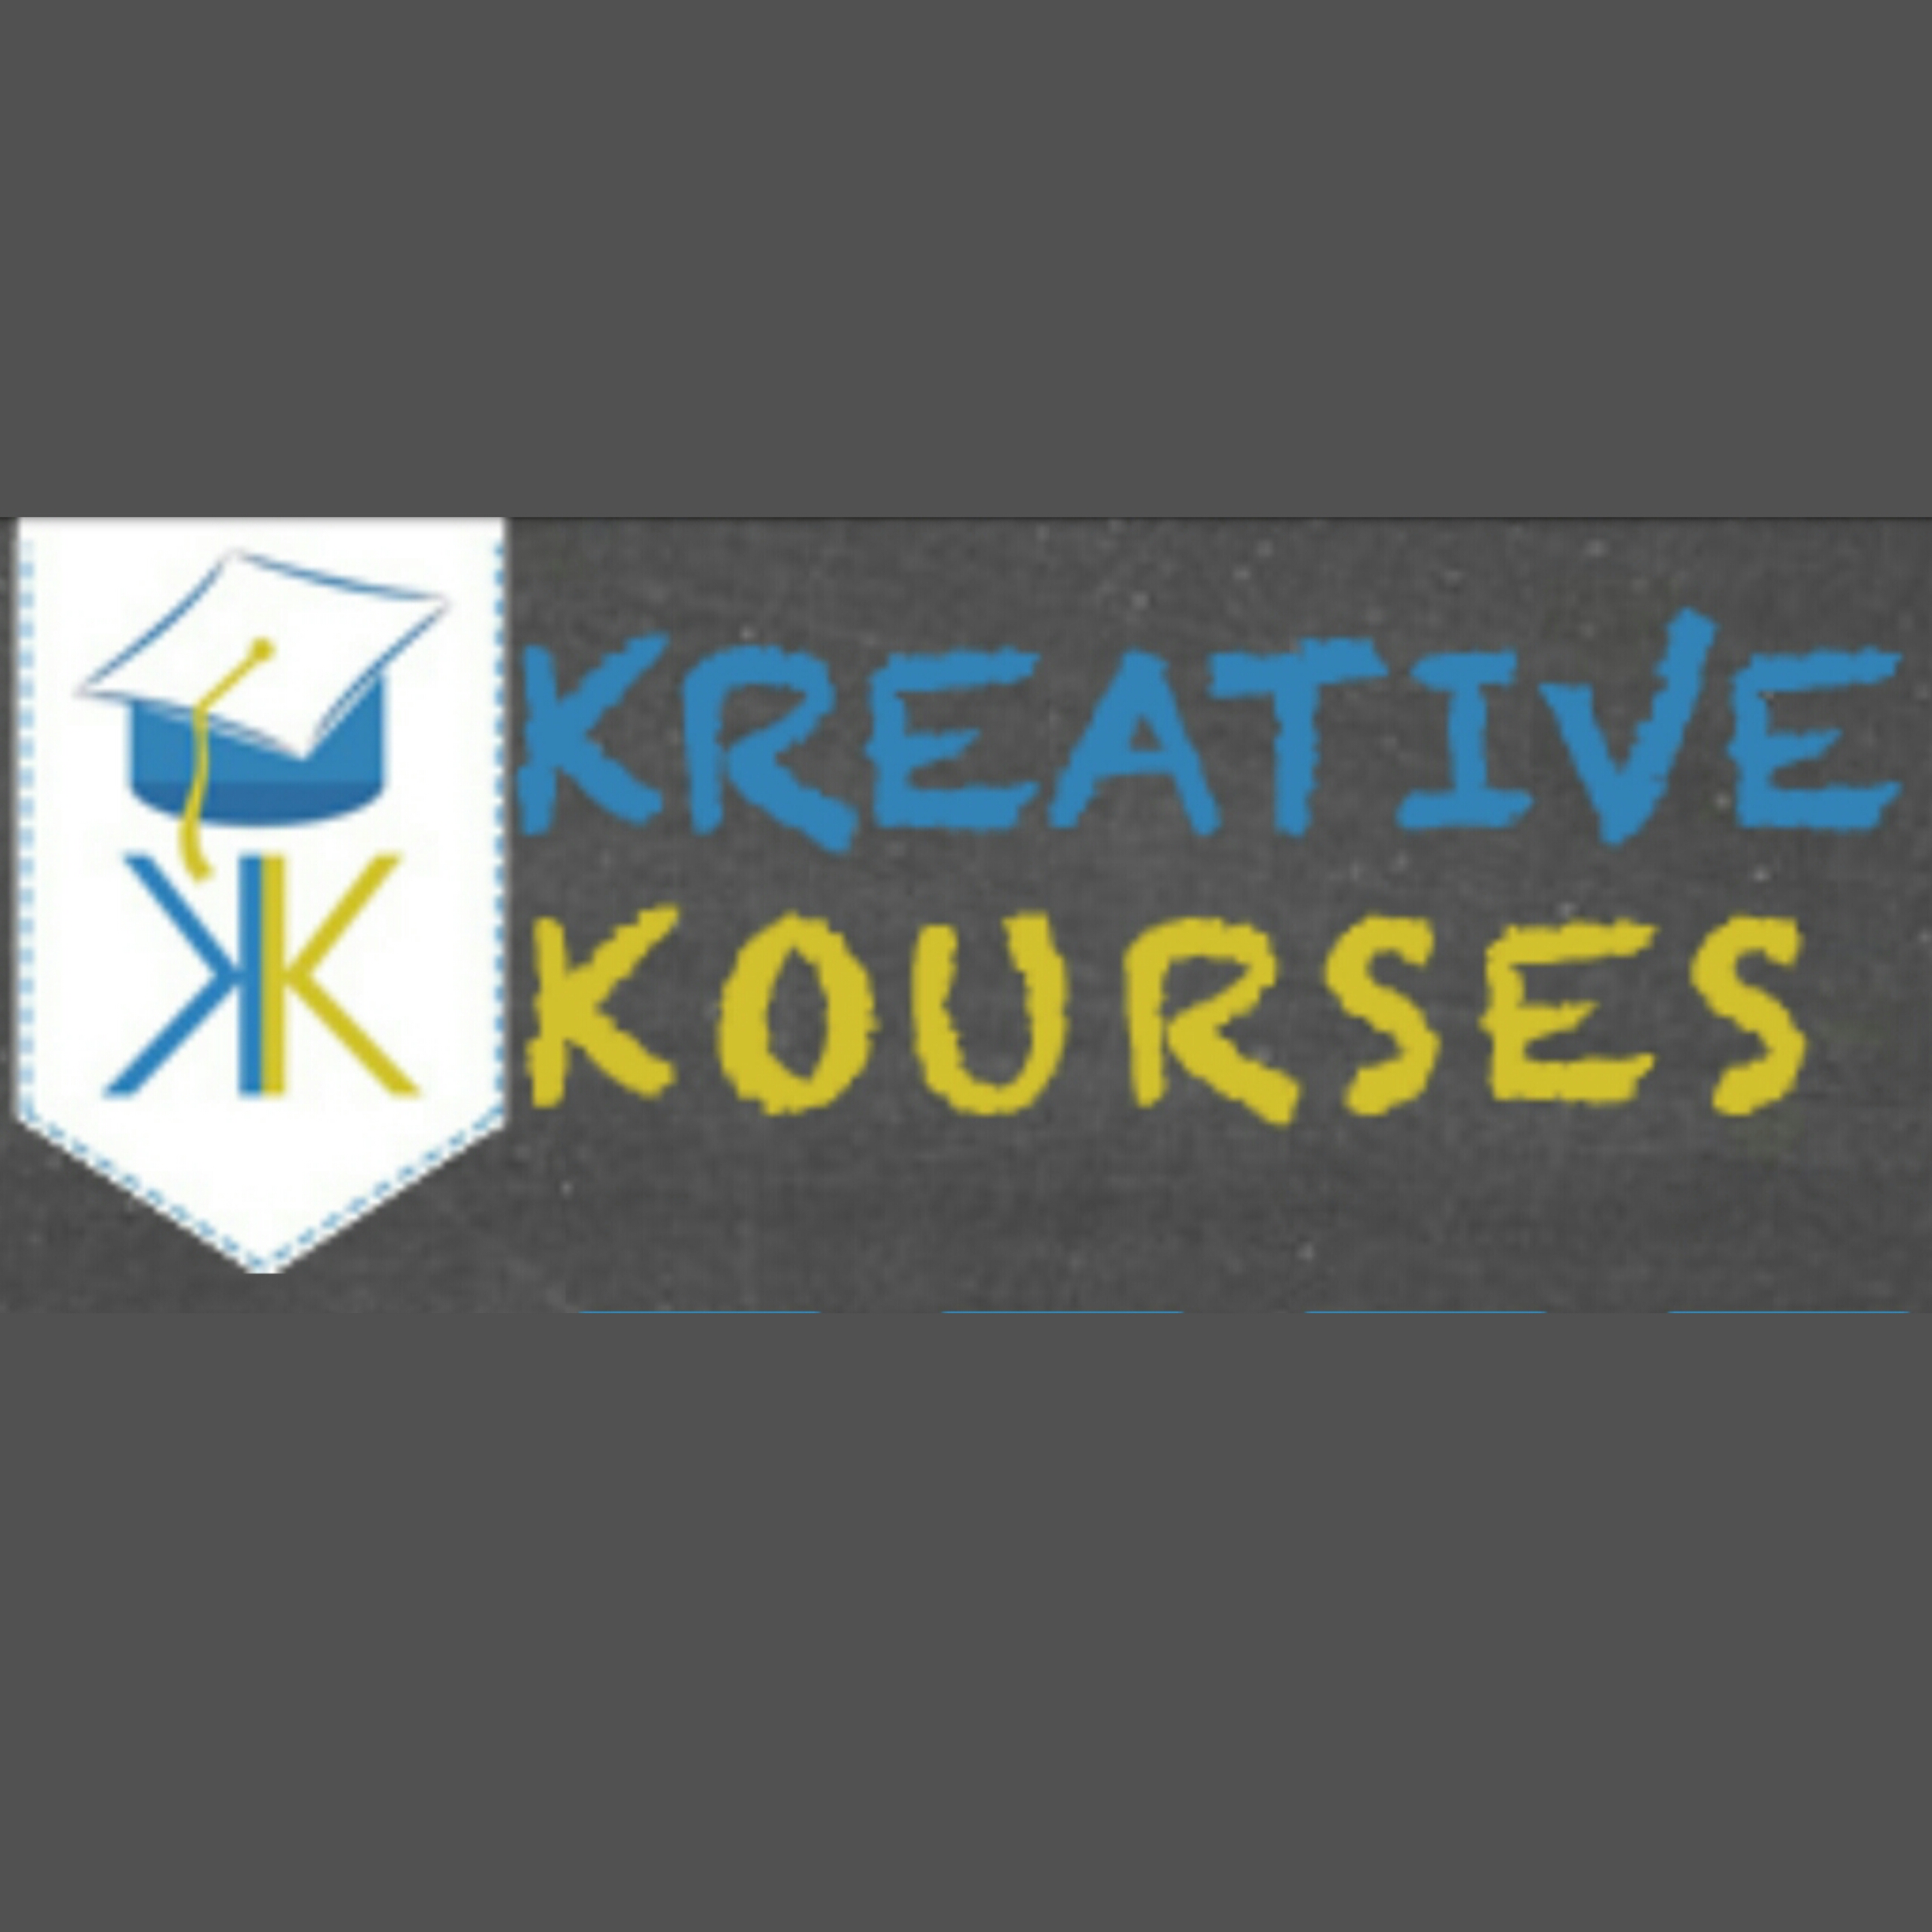 Kreative Kourses from Kindergarten to Kollege... Beaumont Educational Services